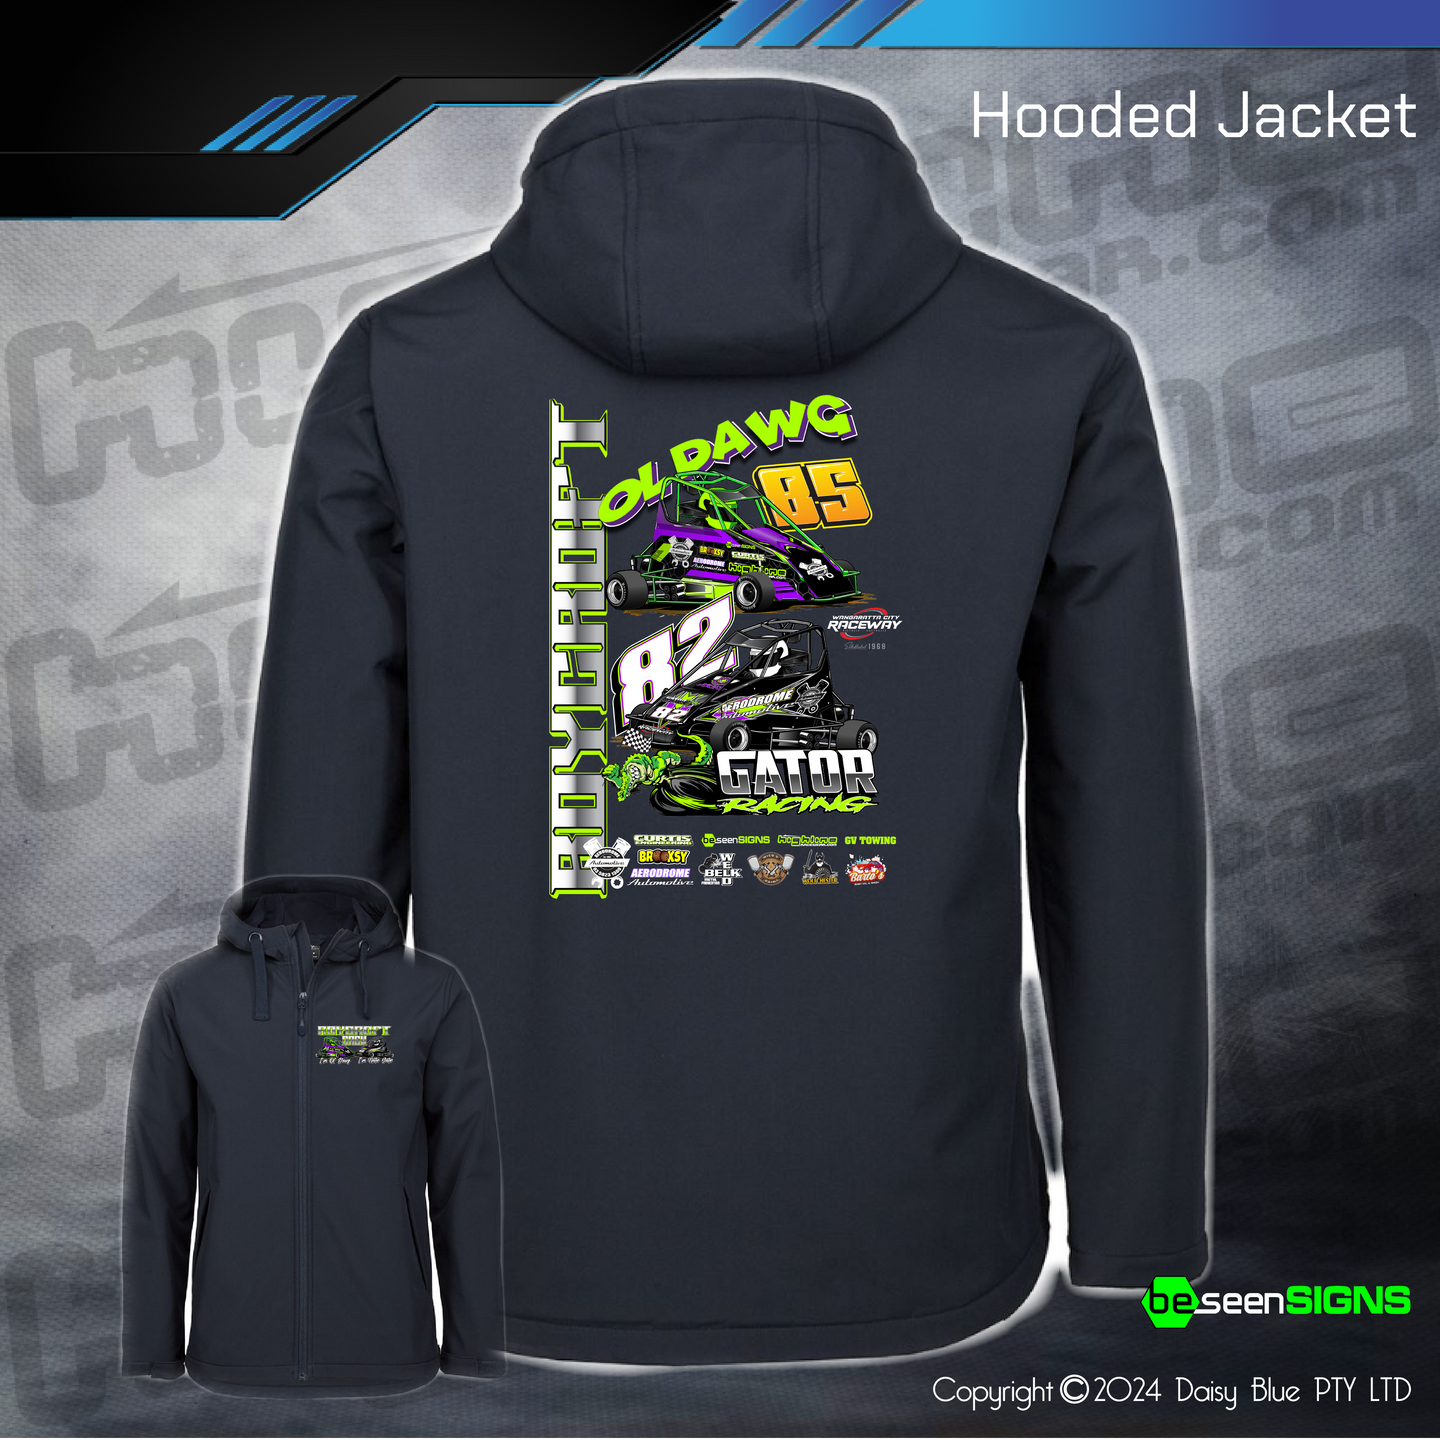 Hooded Jacket - Roycroft Brothers